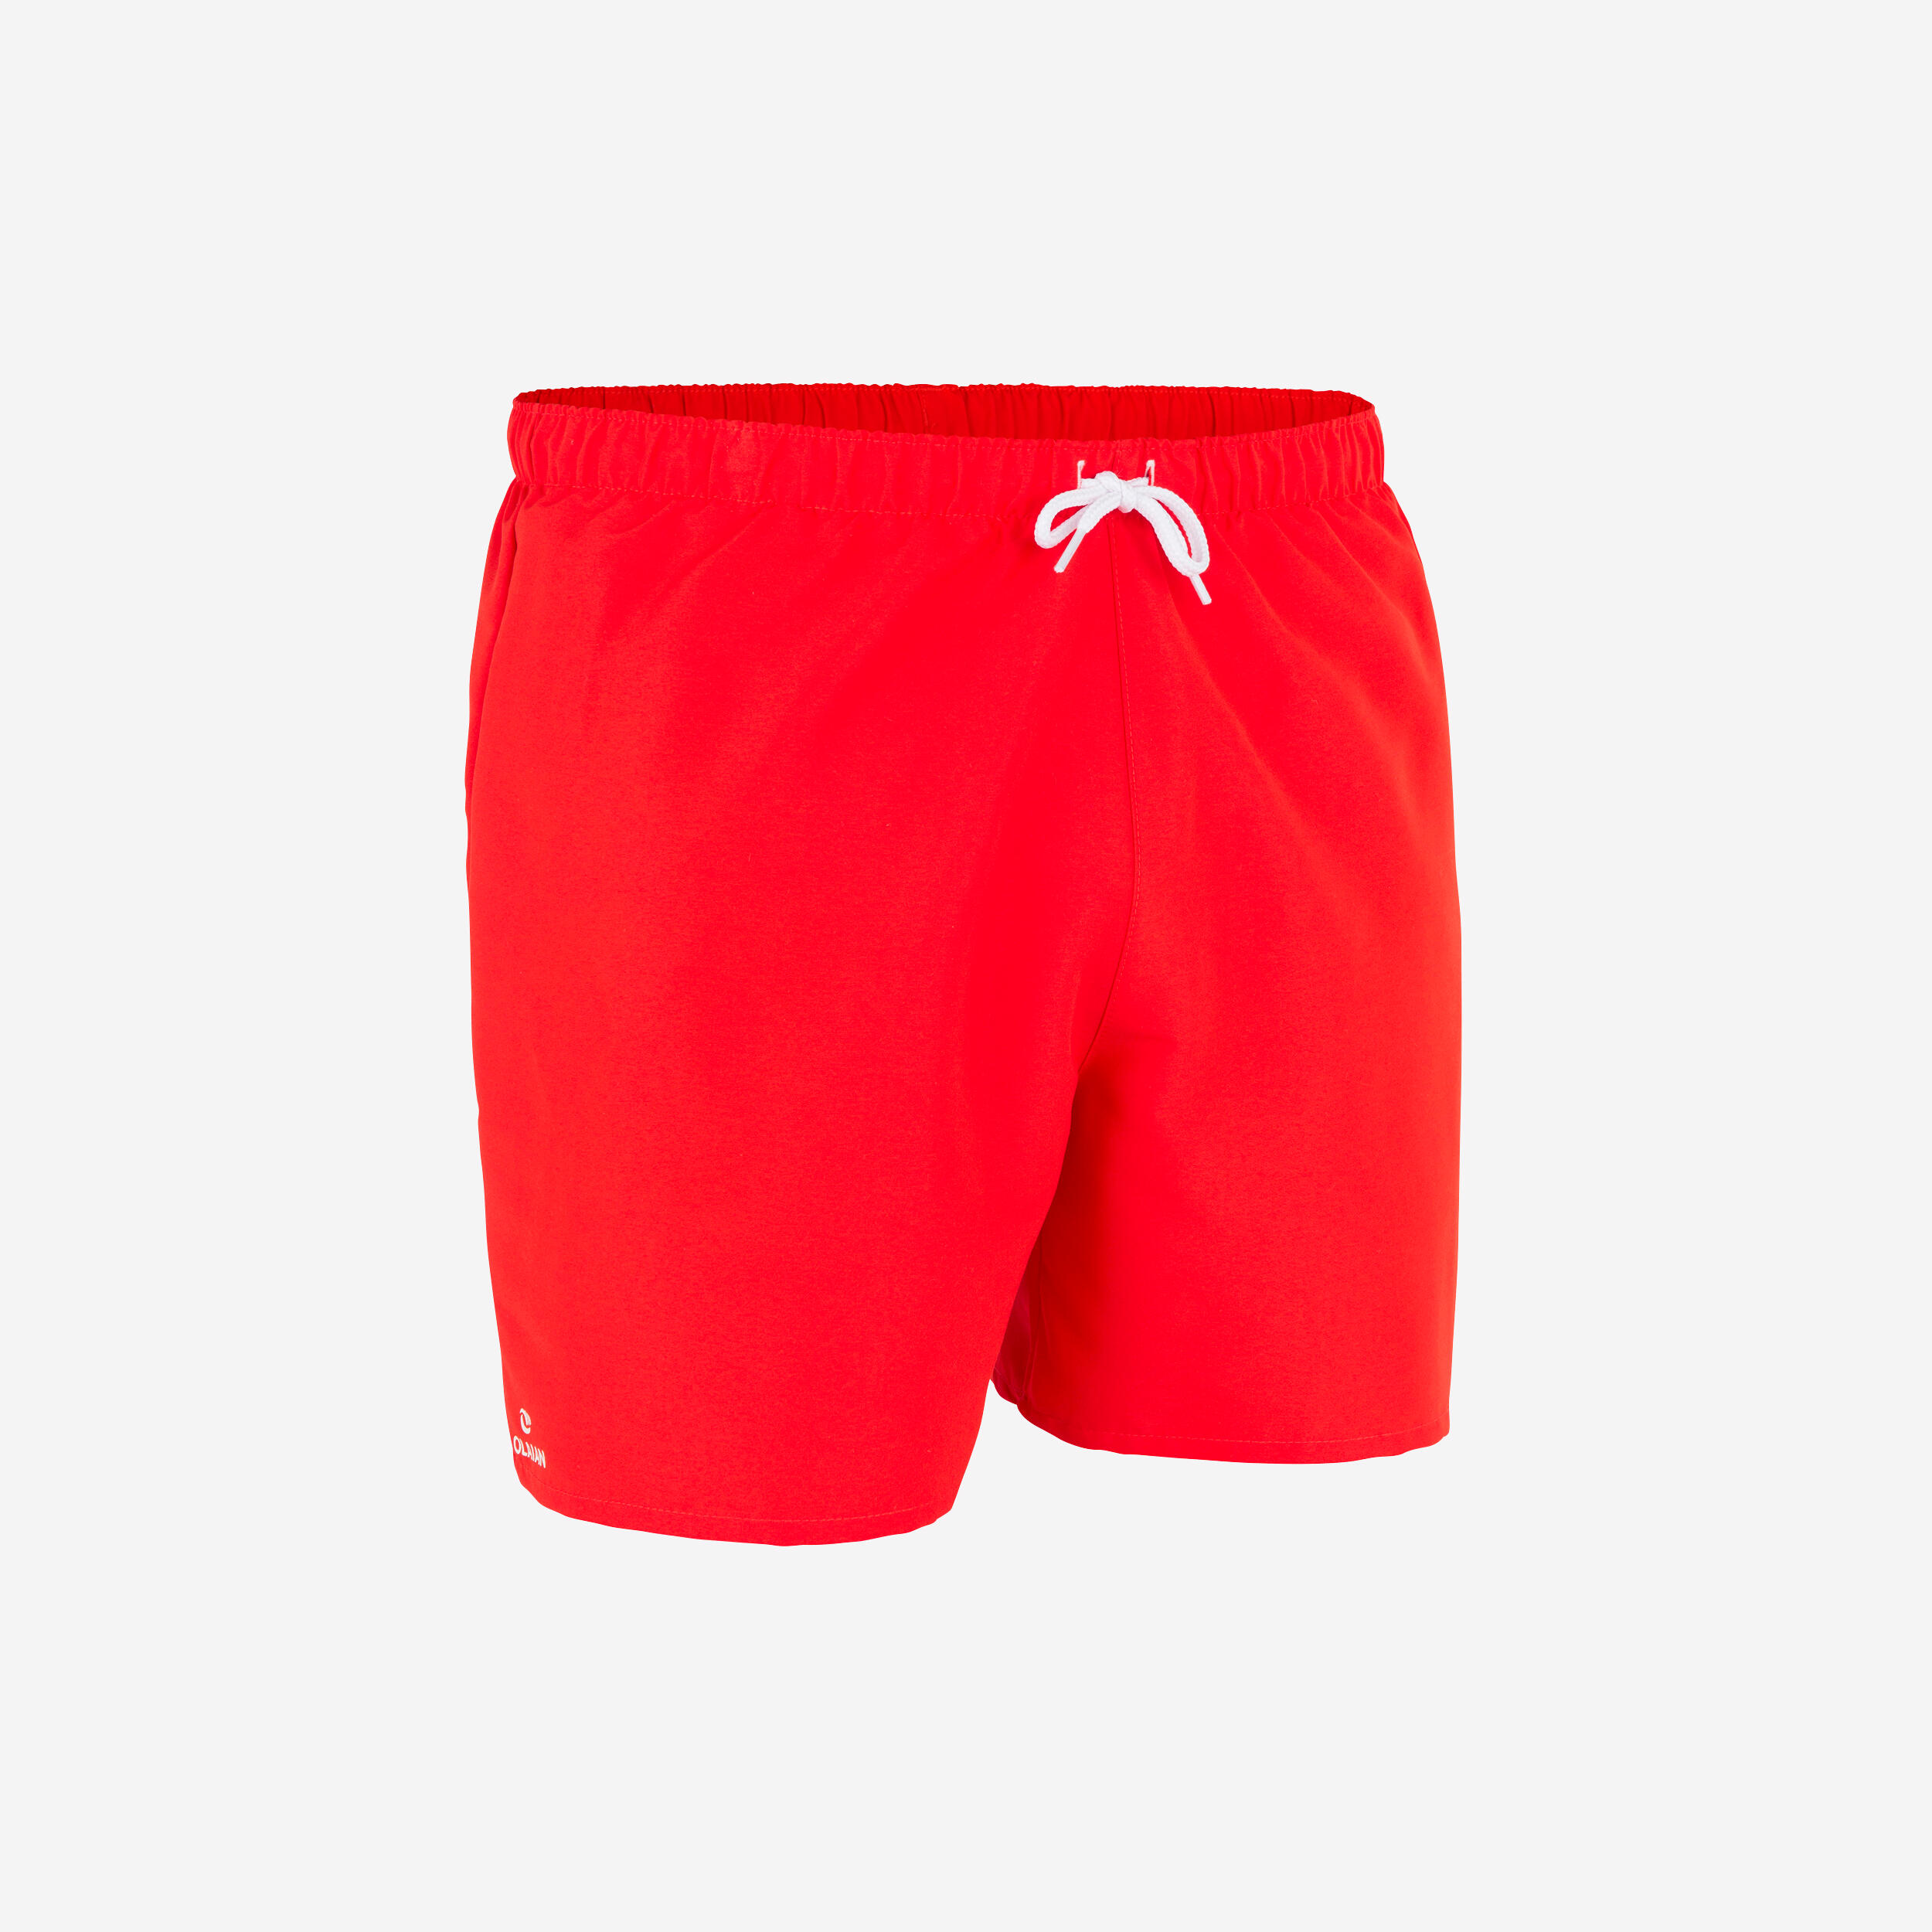 decathlon nylon shorts